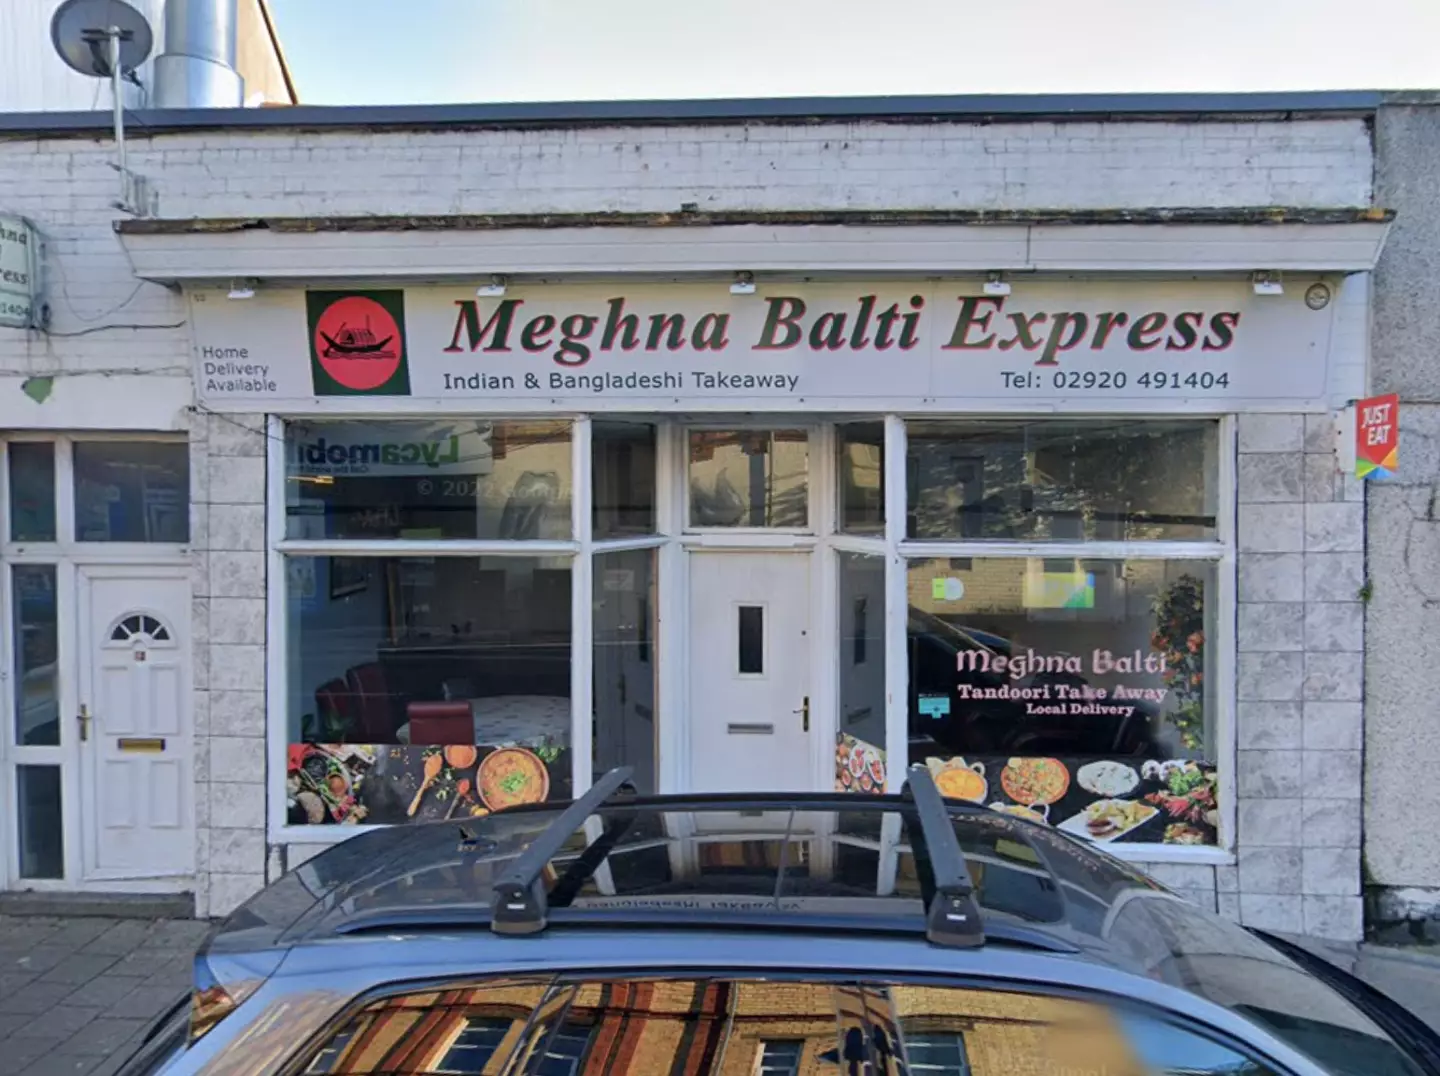 Meghna Balti Express in Cardiff.